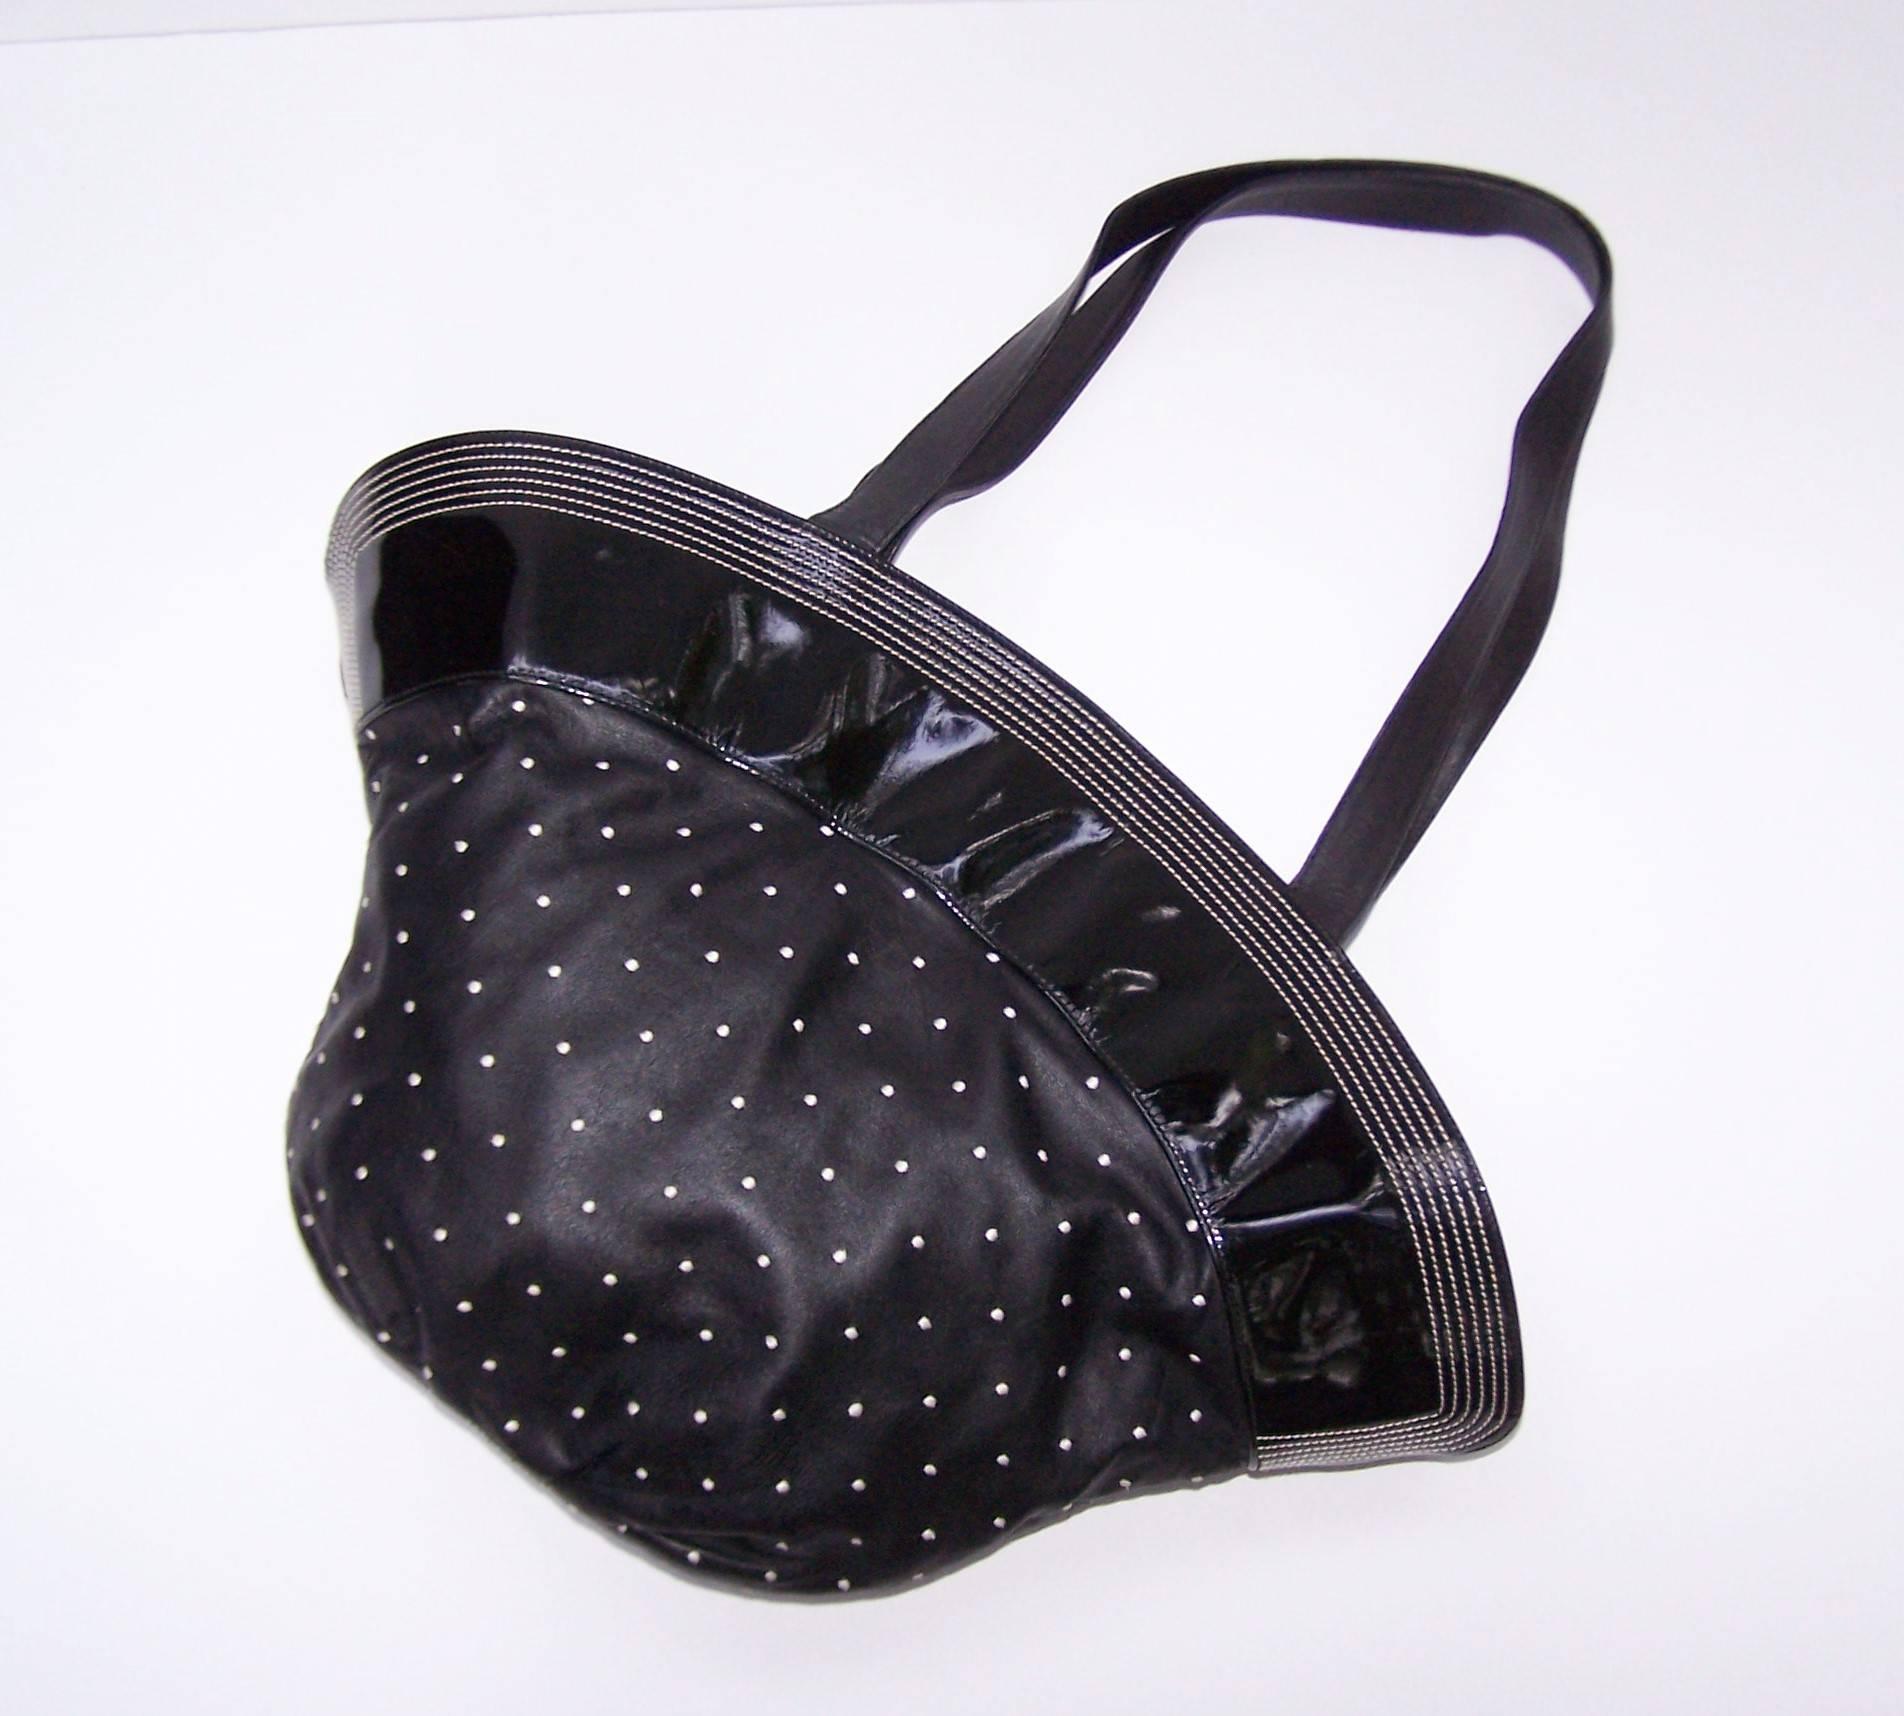 Women's 1980's Braccialini Black & White Polka Dot Patent Leather Handbag